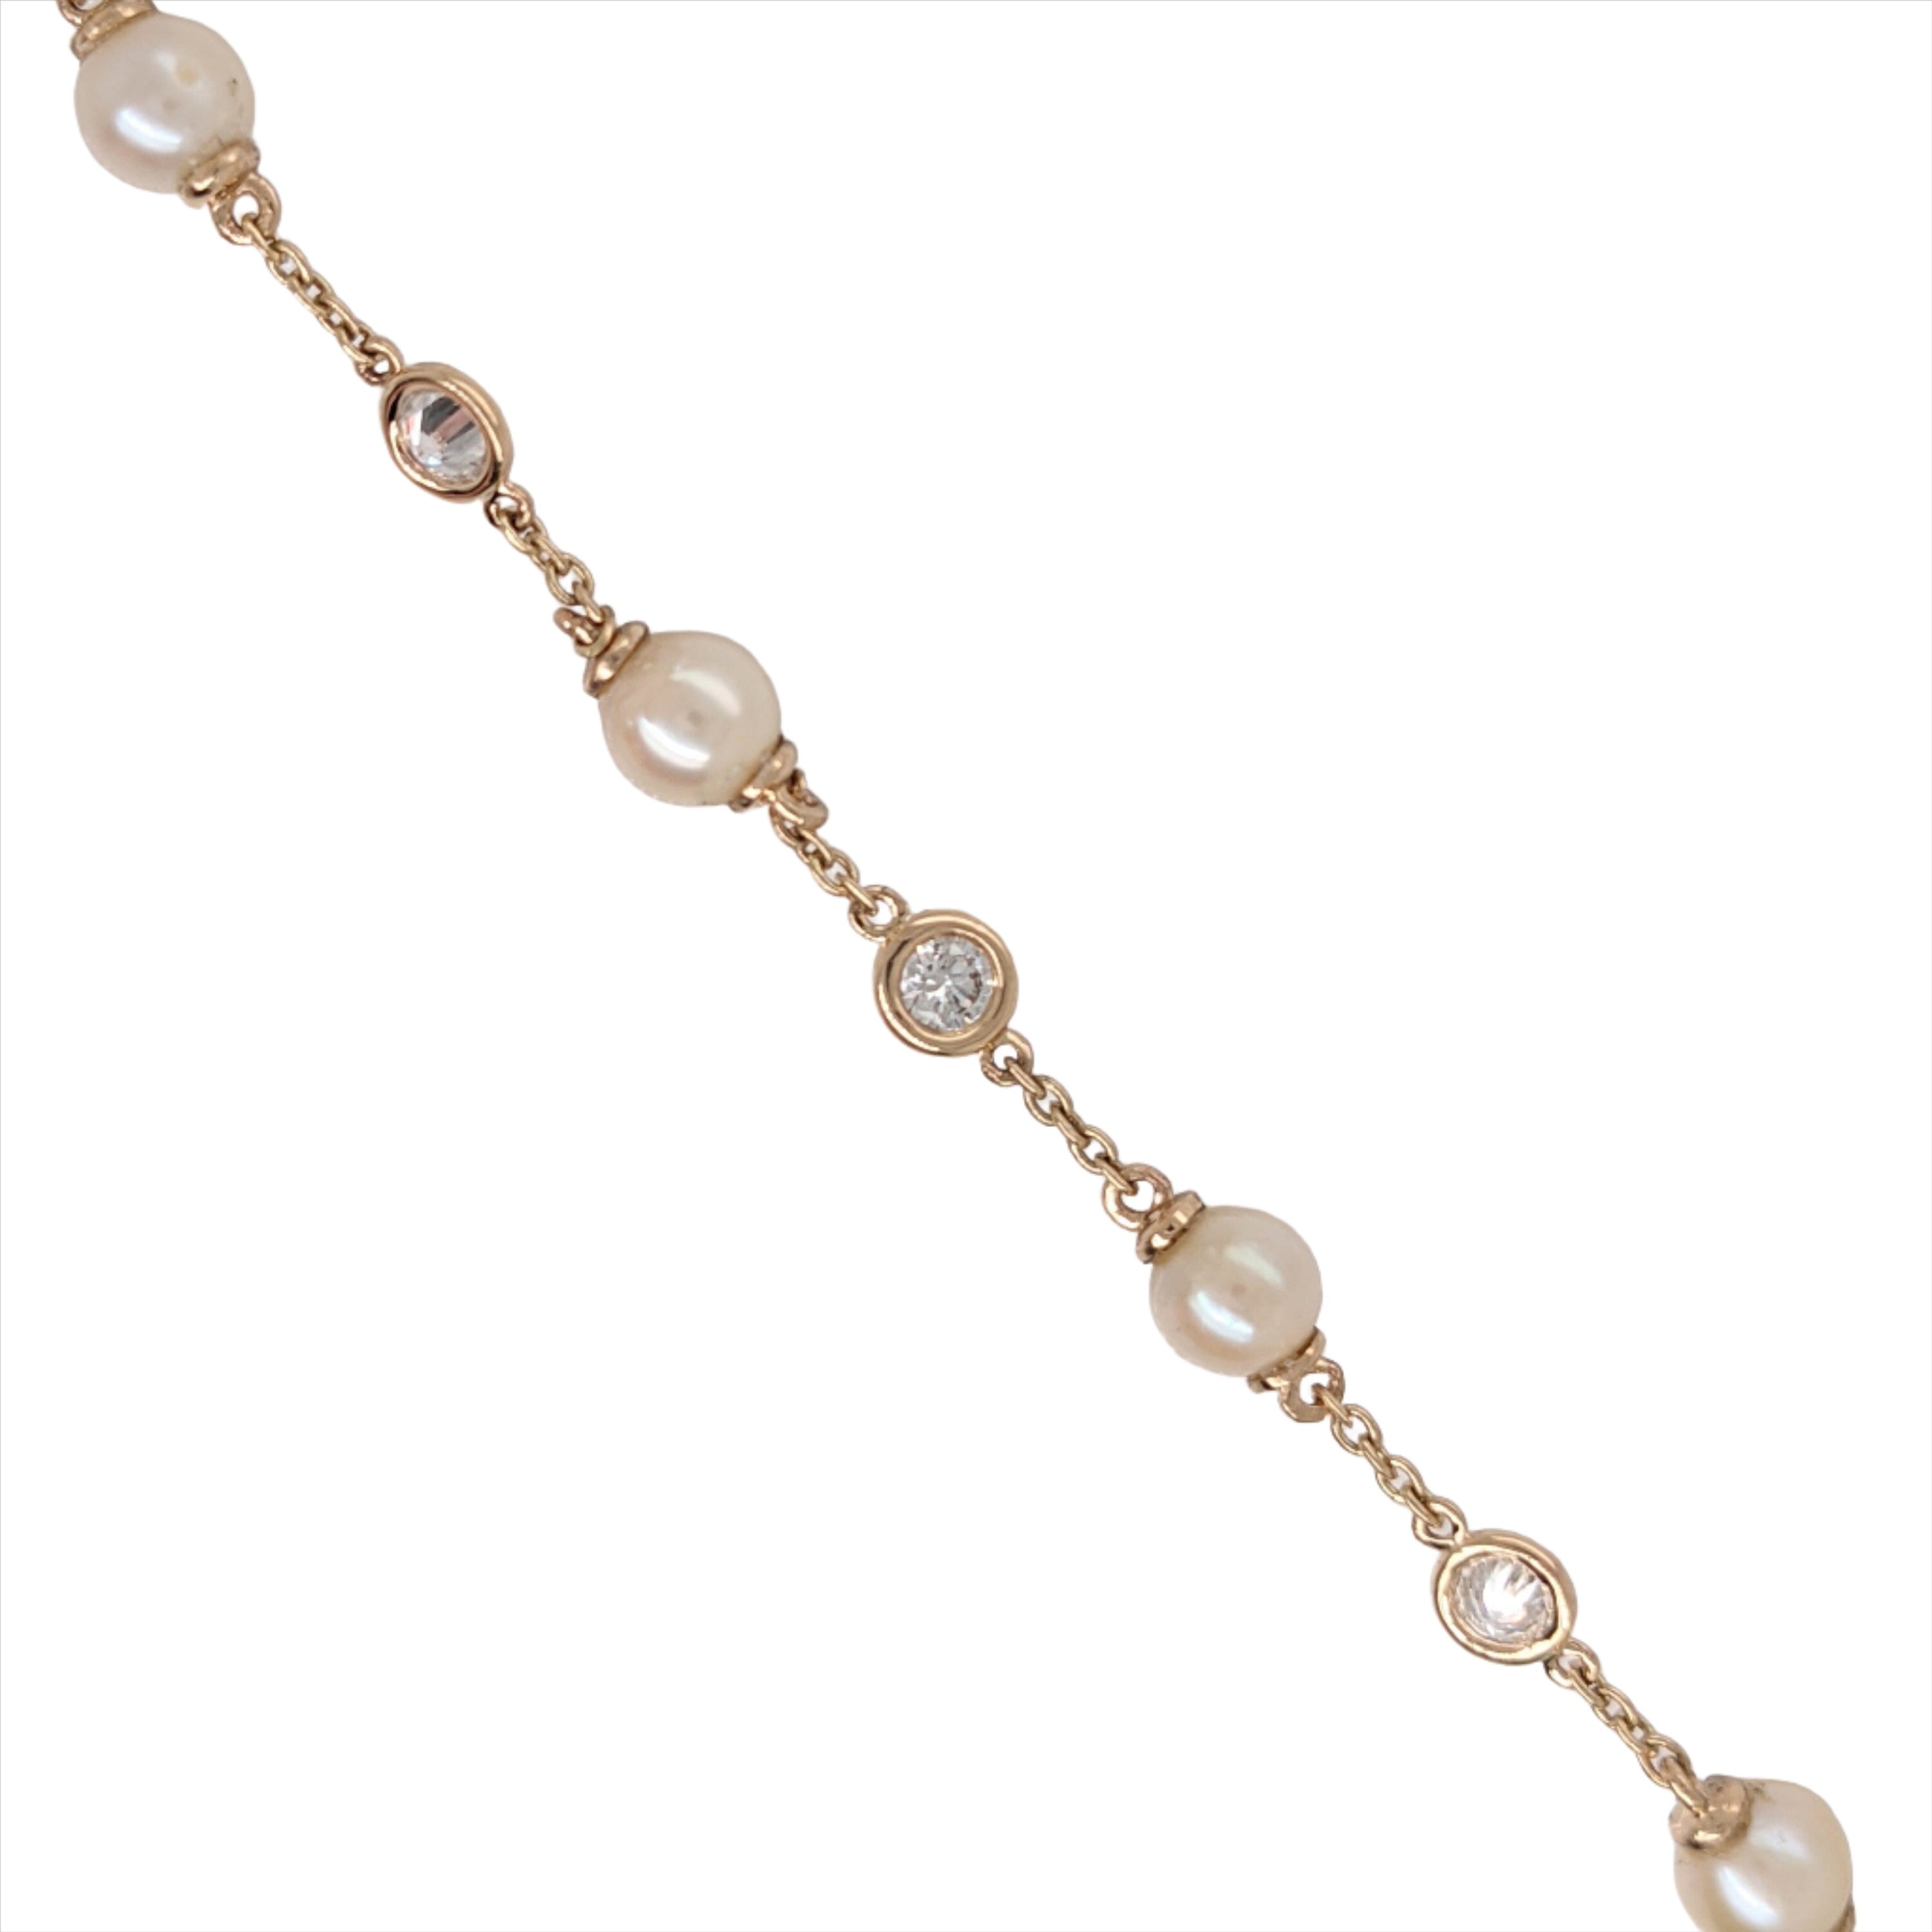 Delicate Natural Pearl and Diamond Bracelet | 14k Gold | Bezel Diamond | Gold Chain Bracelet | Cute and Elegant | Daily Wear | Customizable